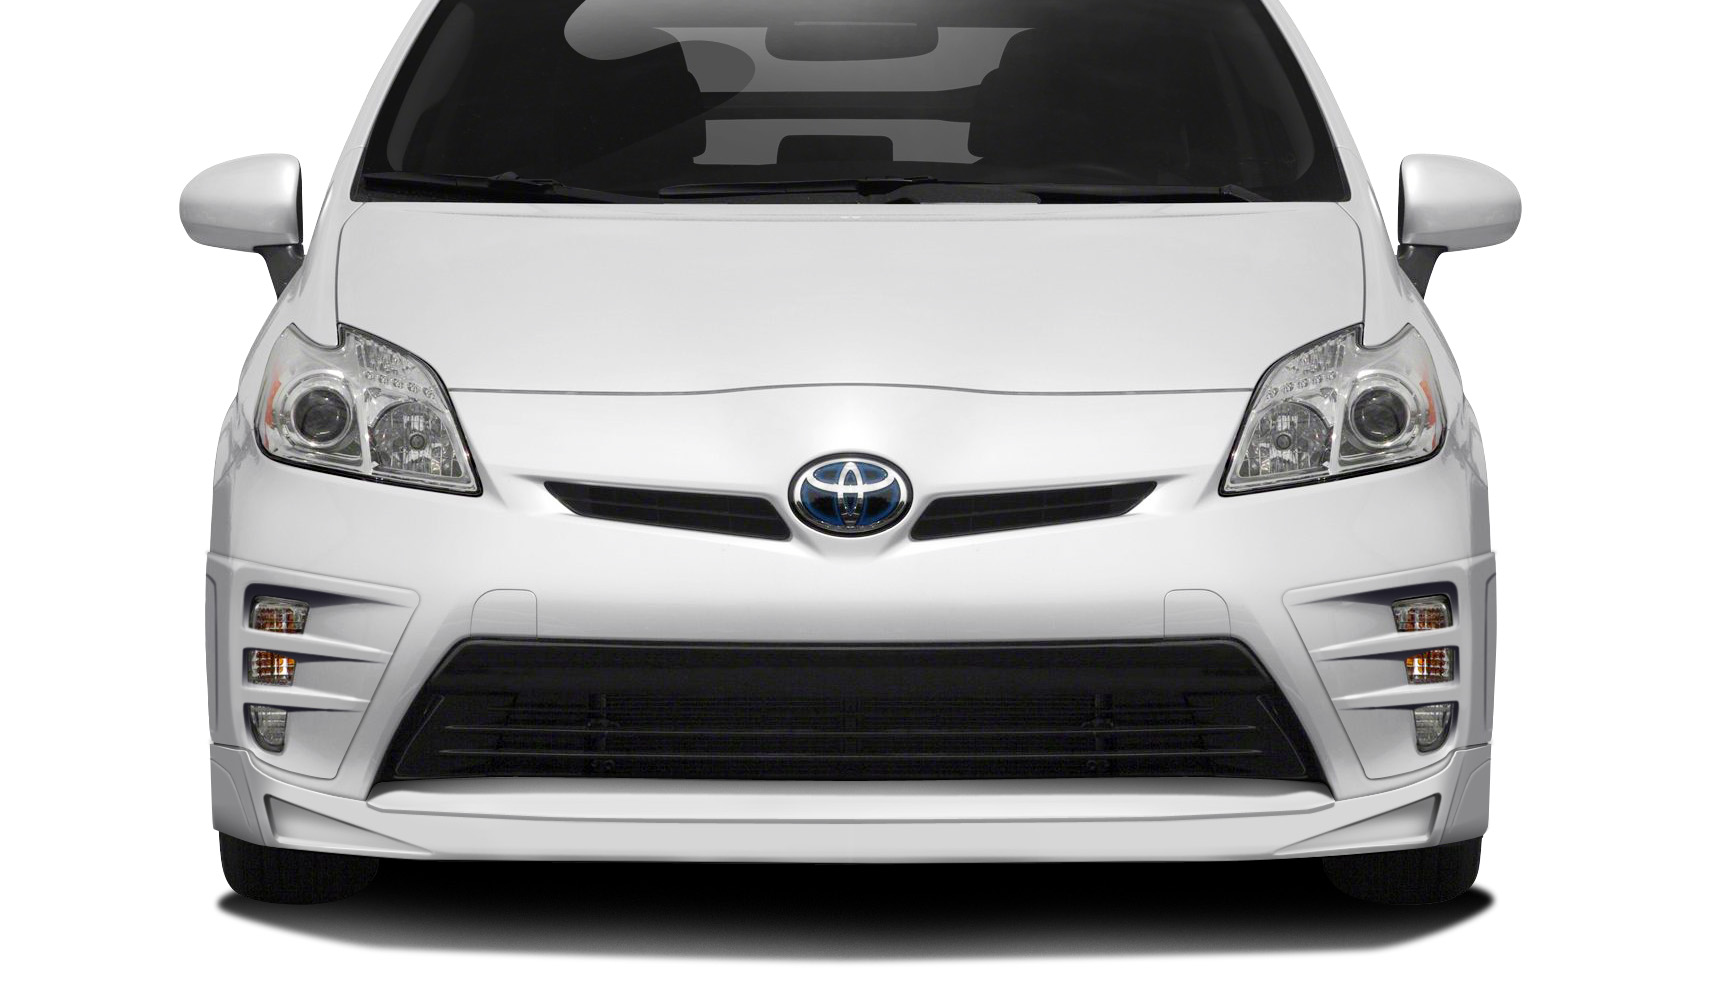 2015 Toyota Prius  - Polyurethane Body Kit Bodykit - Toyota Prius Couture Vortex Body Kit - 10 Piece - Includes Vortex Front Lip (112376), Vortex Side